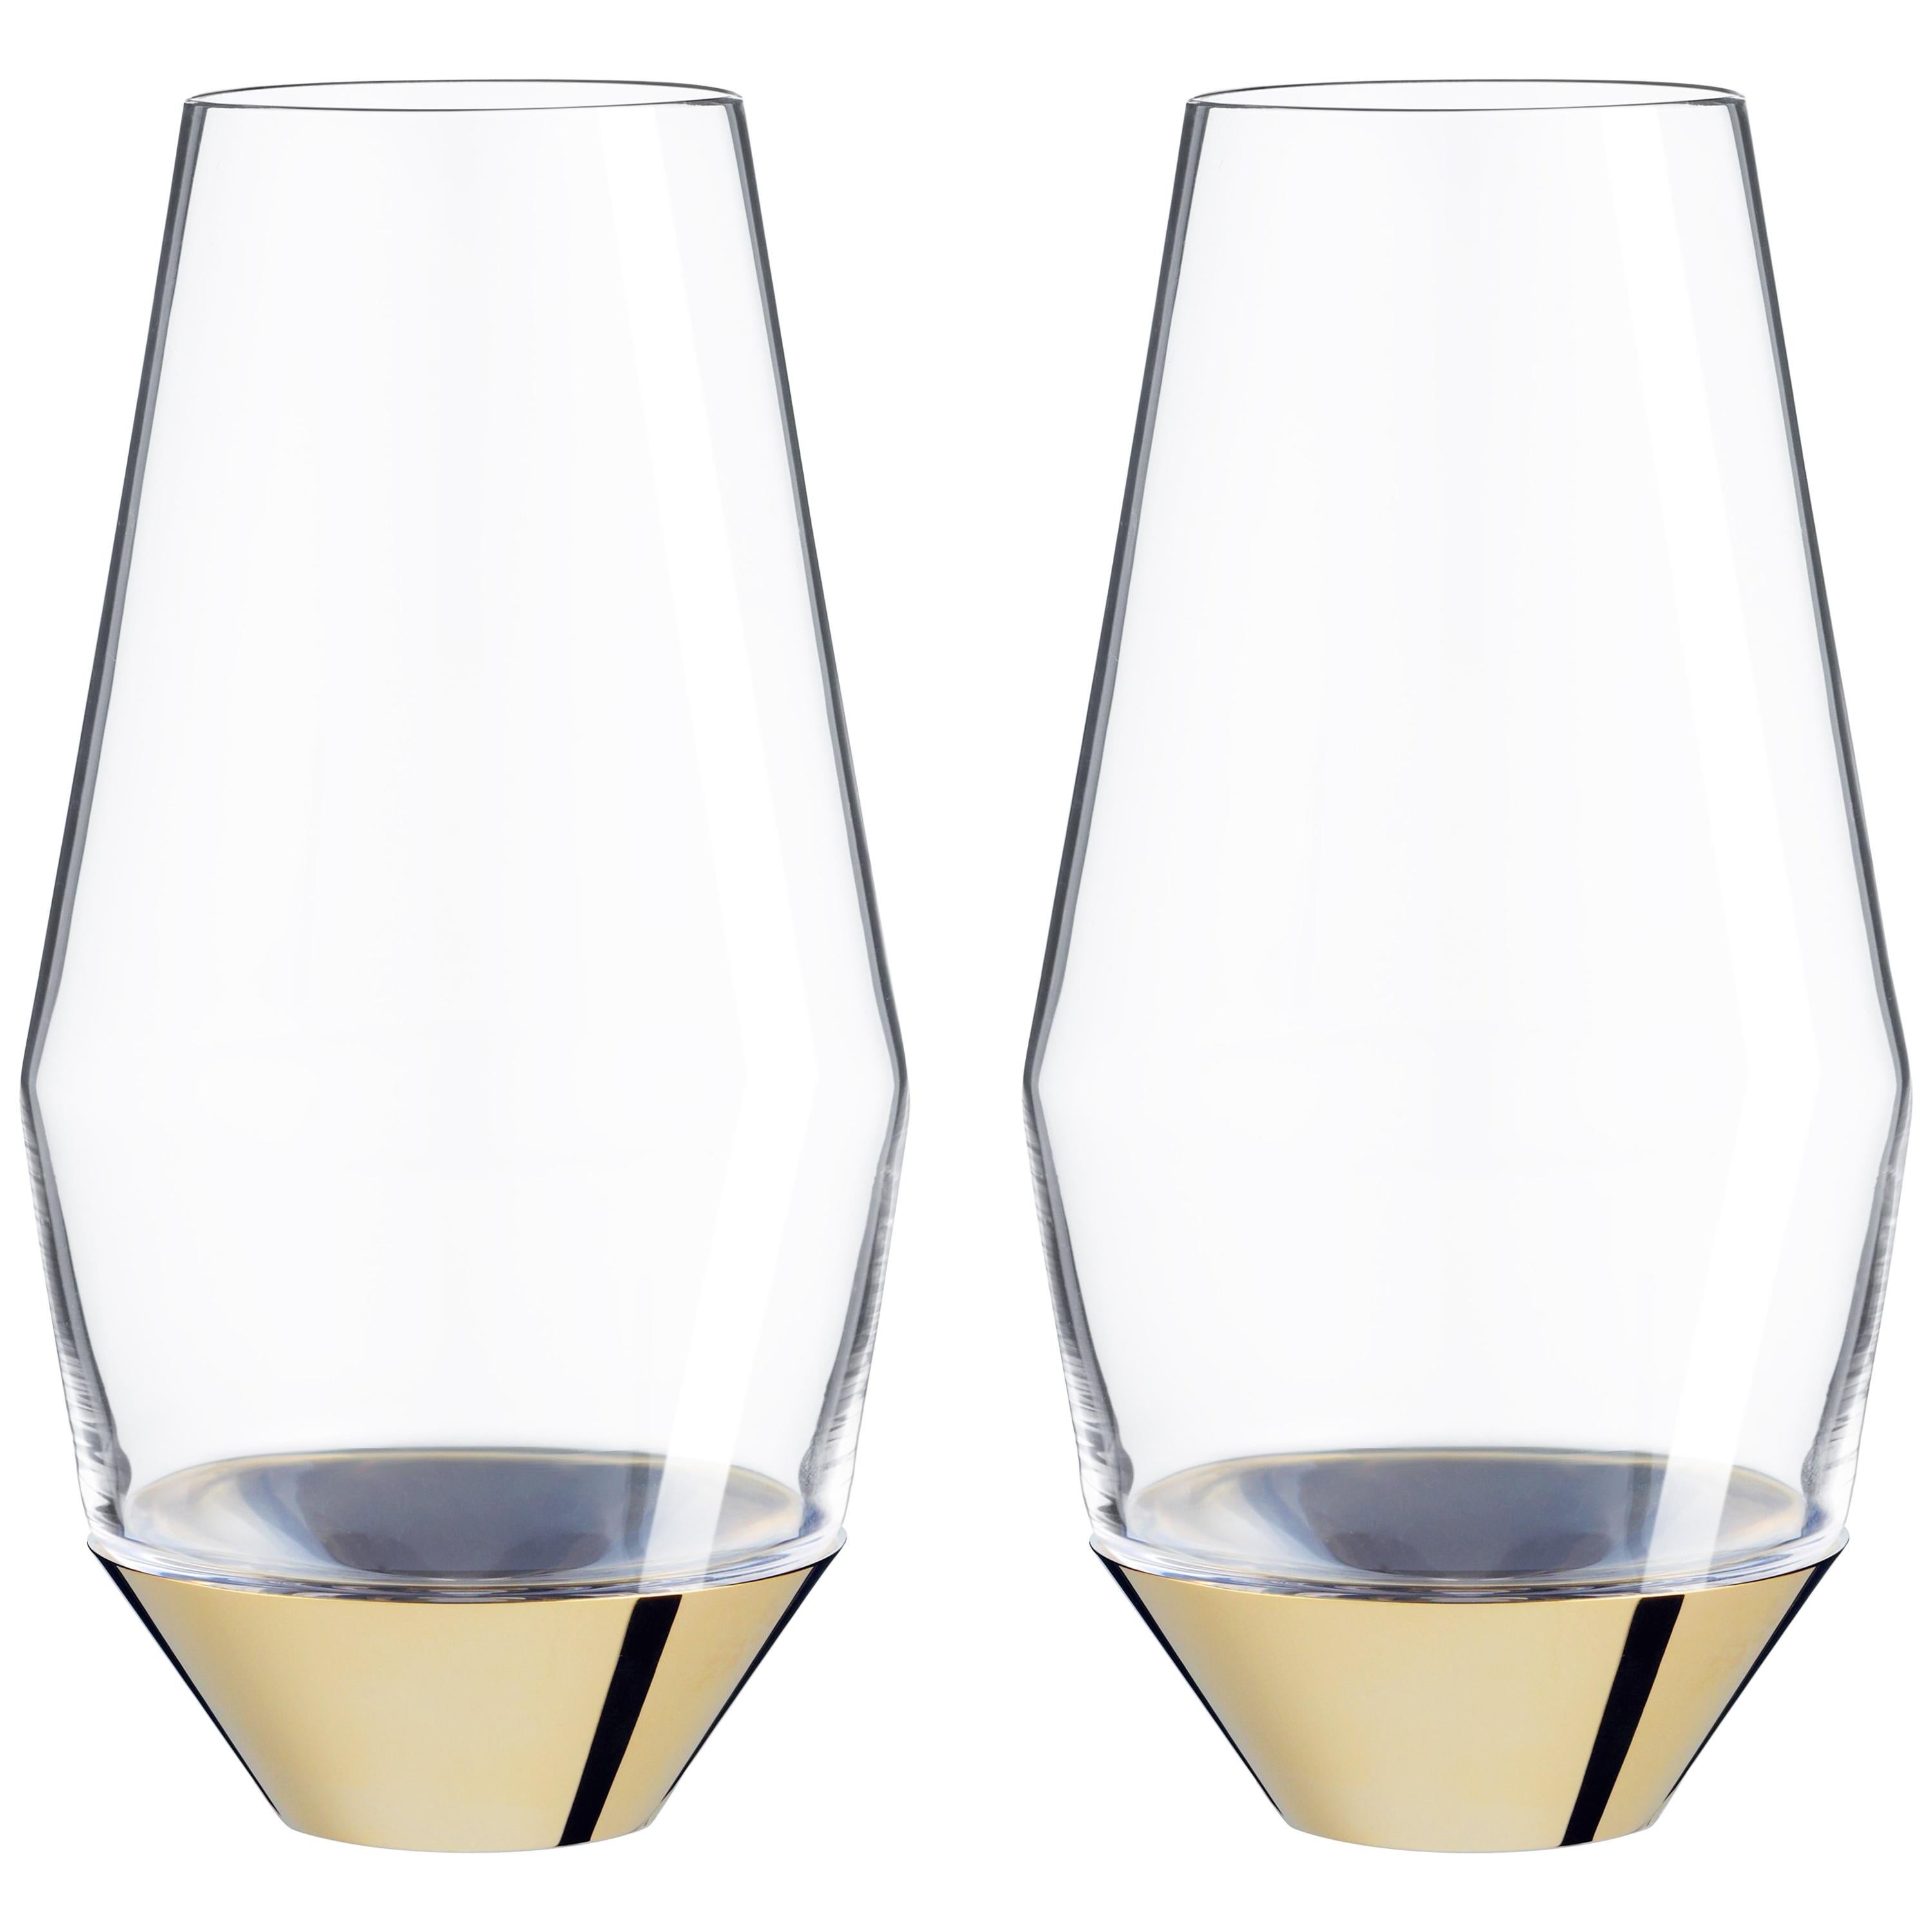 Puiforcat Orfevre Sommelier Set of Two Champagne Glasses, Michael Anastassiades For Sale